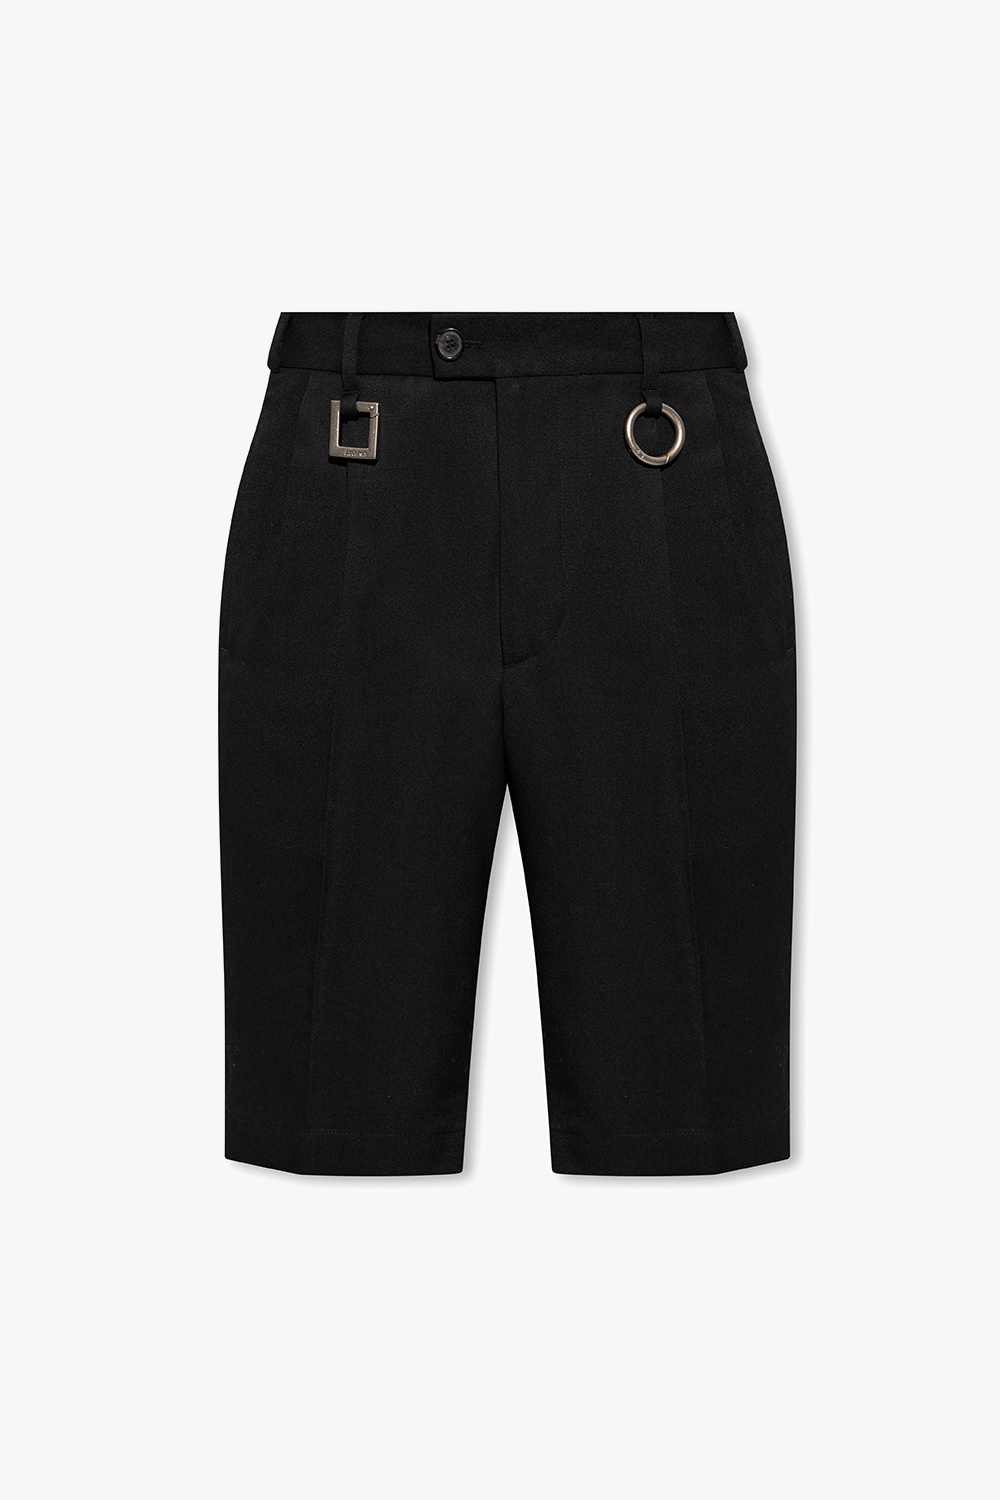 Jacquemus ‘Carre’ shorts